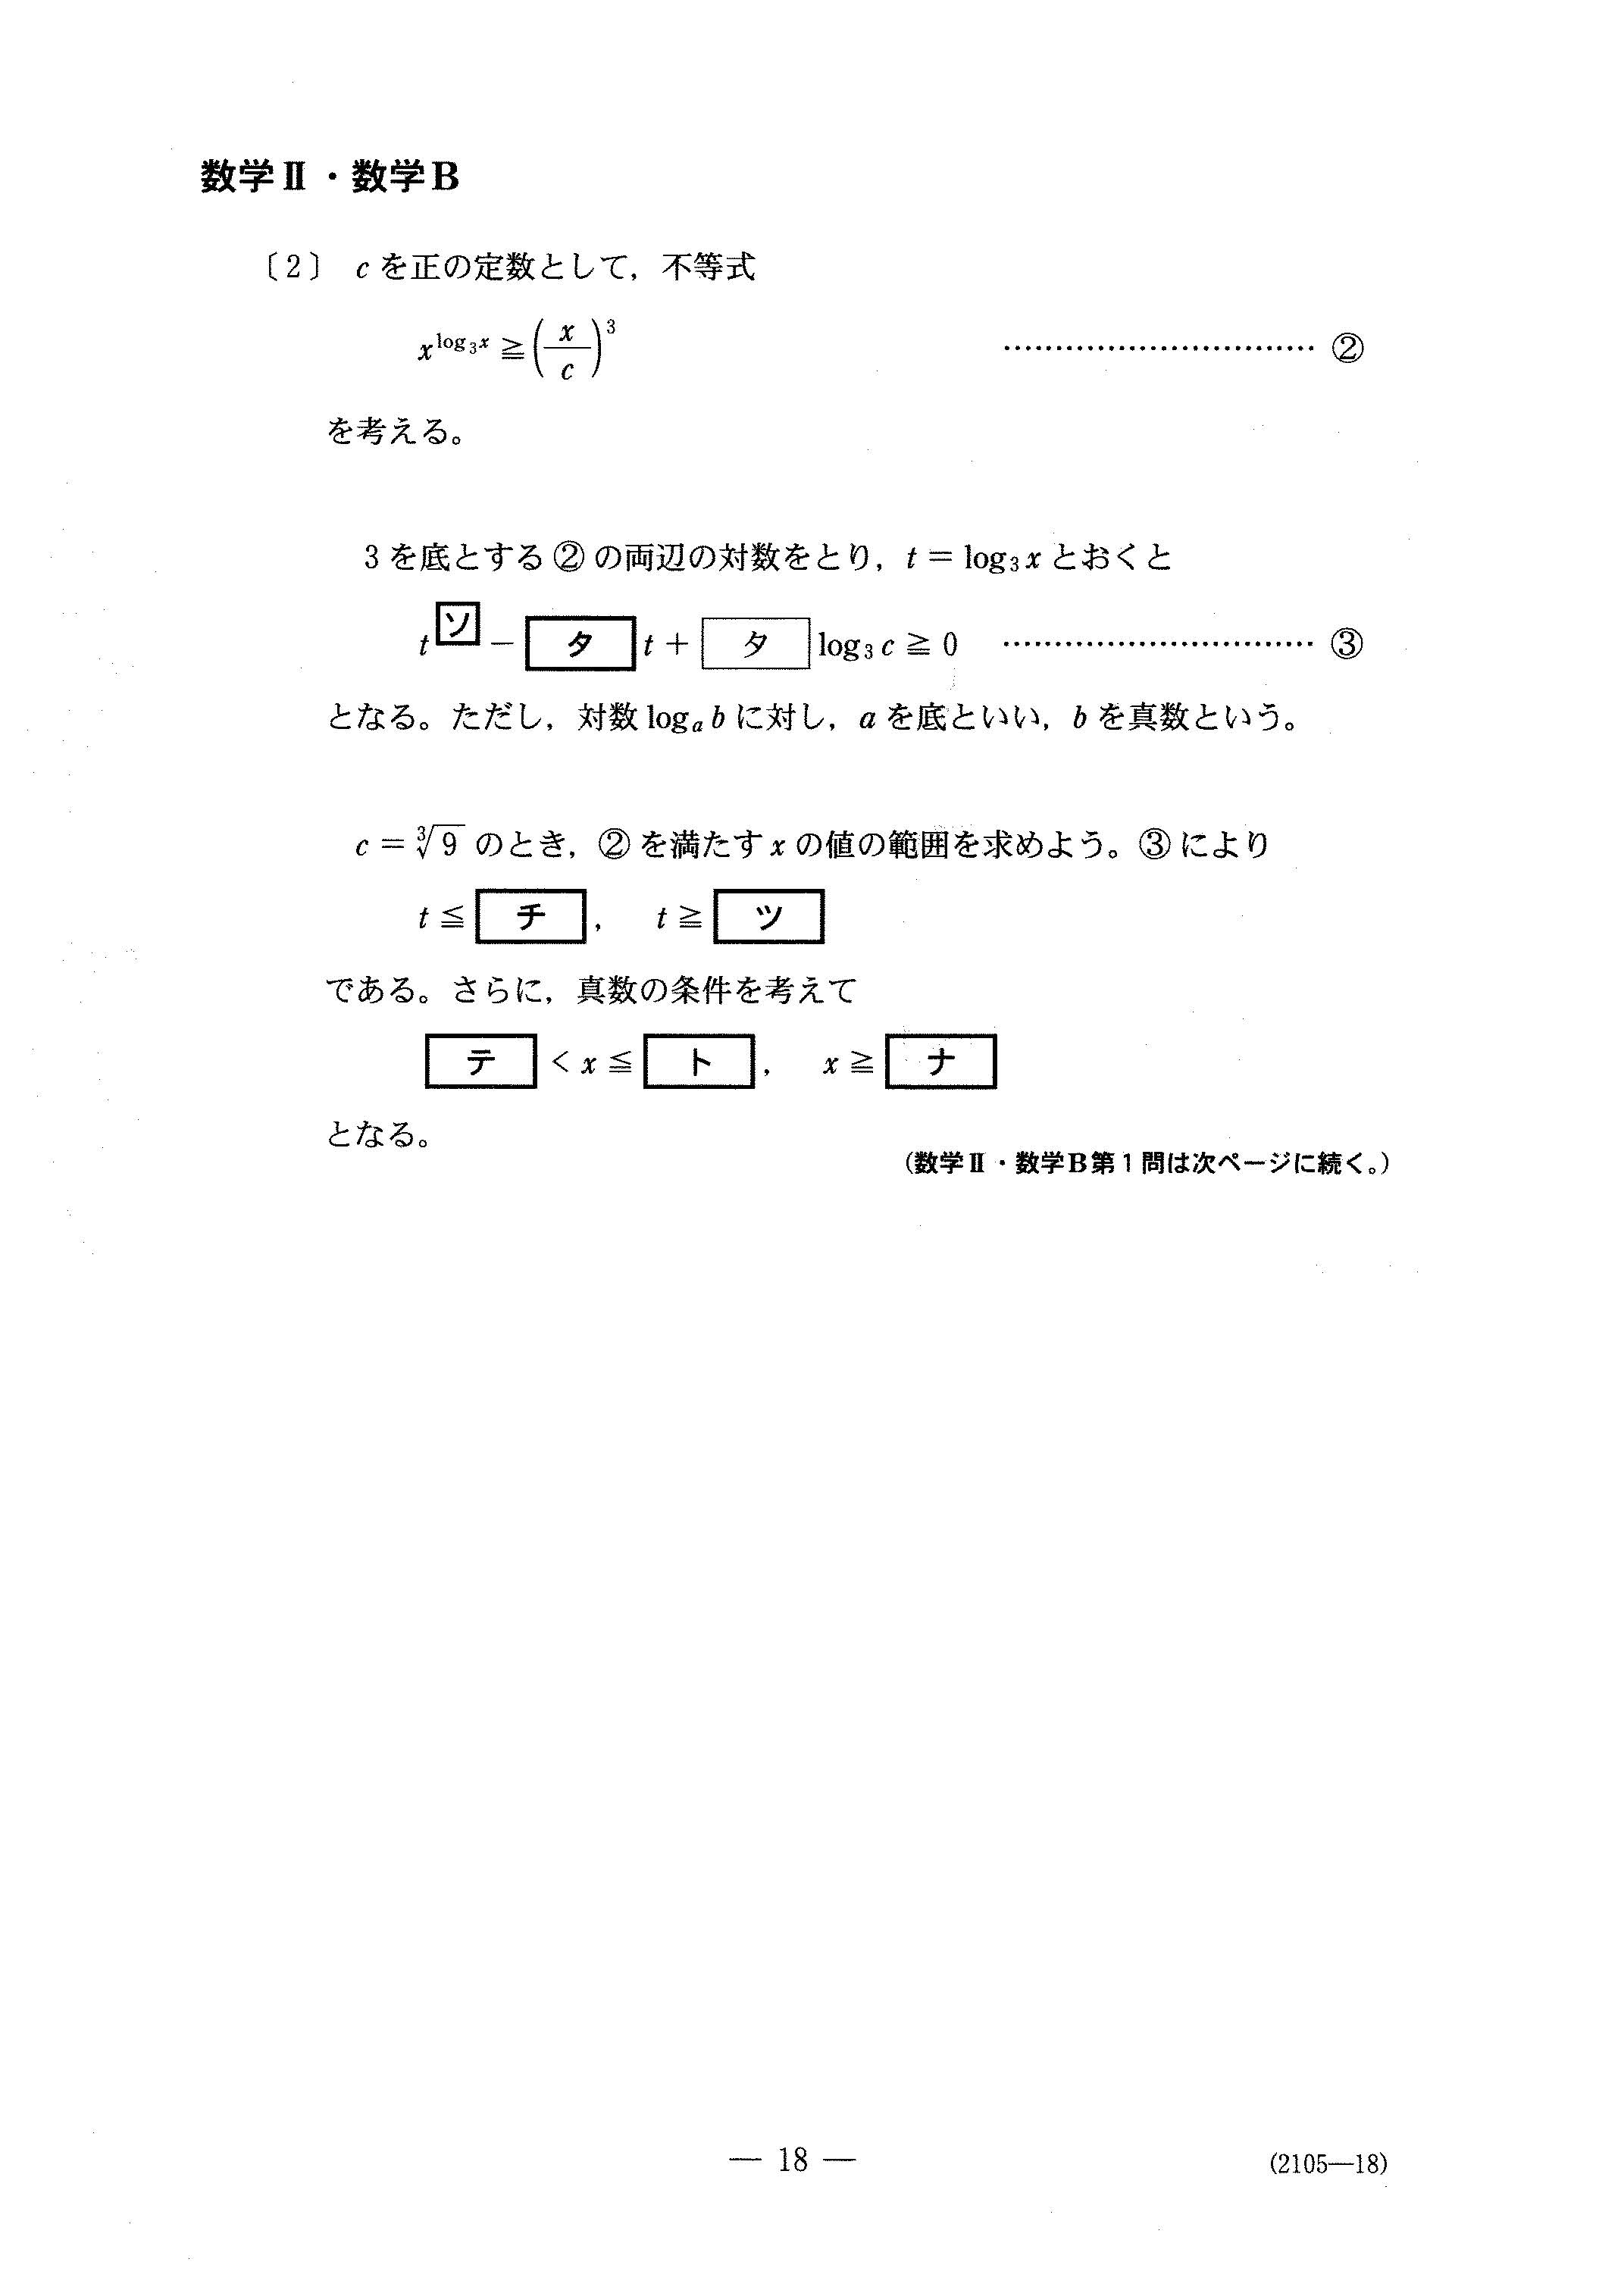 H30数学_数学Ⅱ・数学B 大学入試センター試験過去問